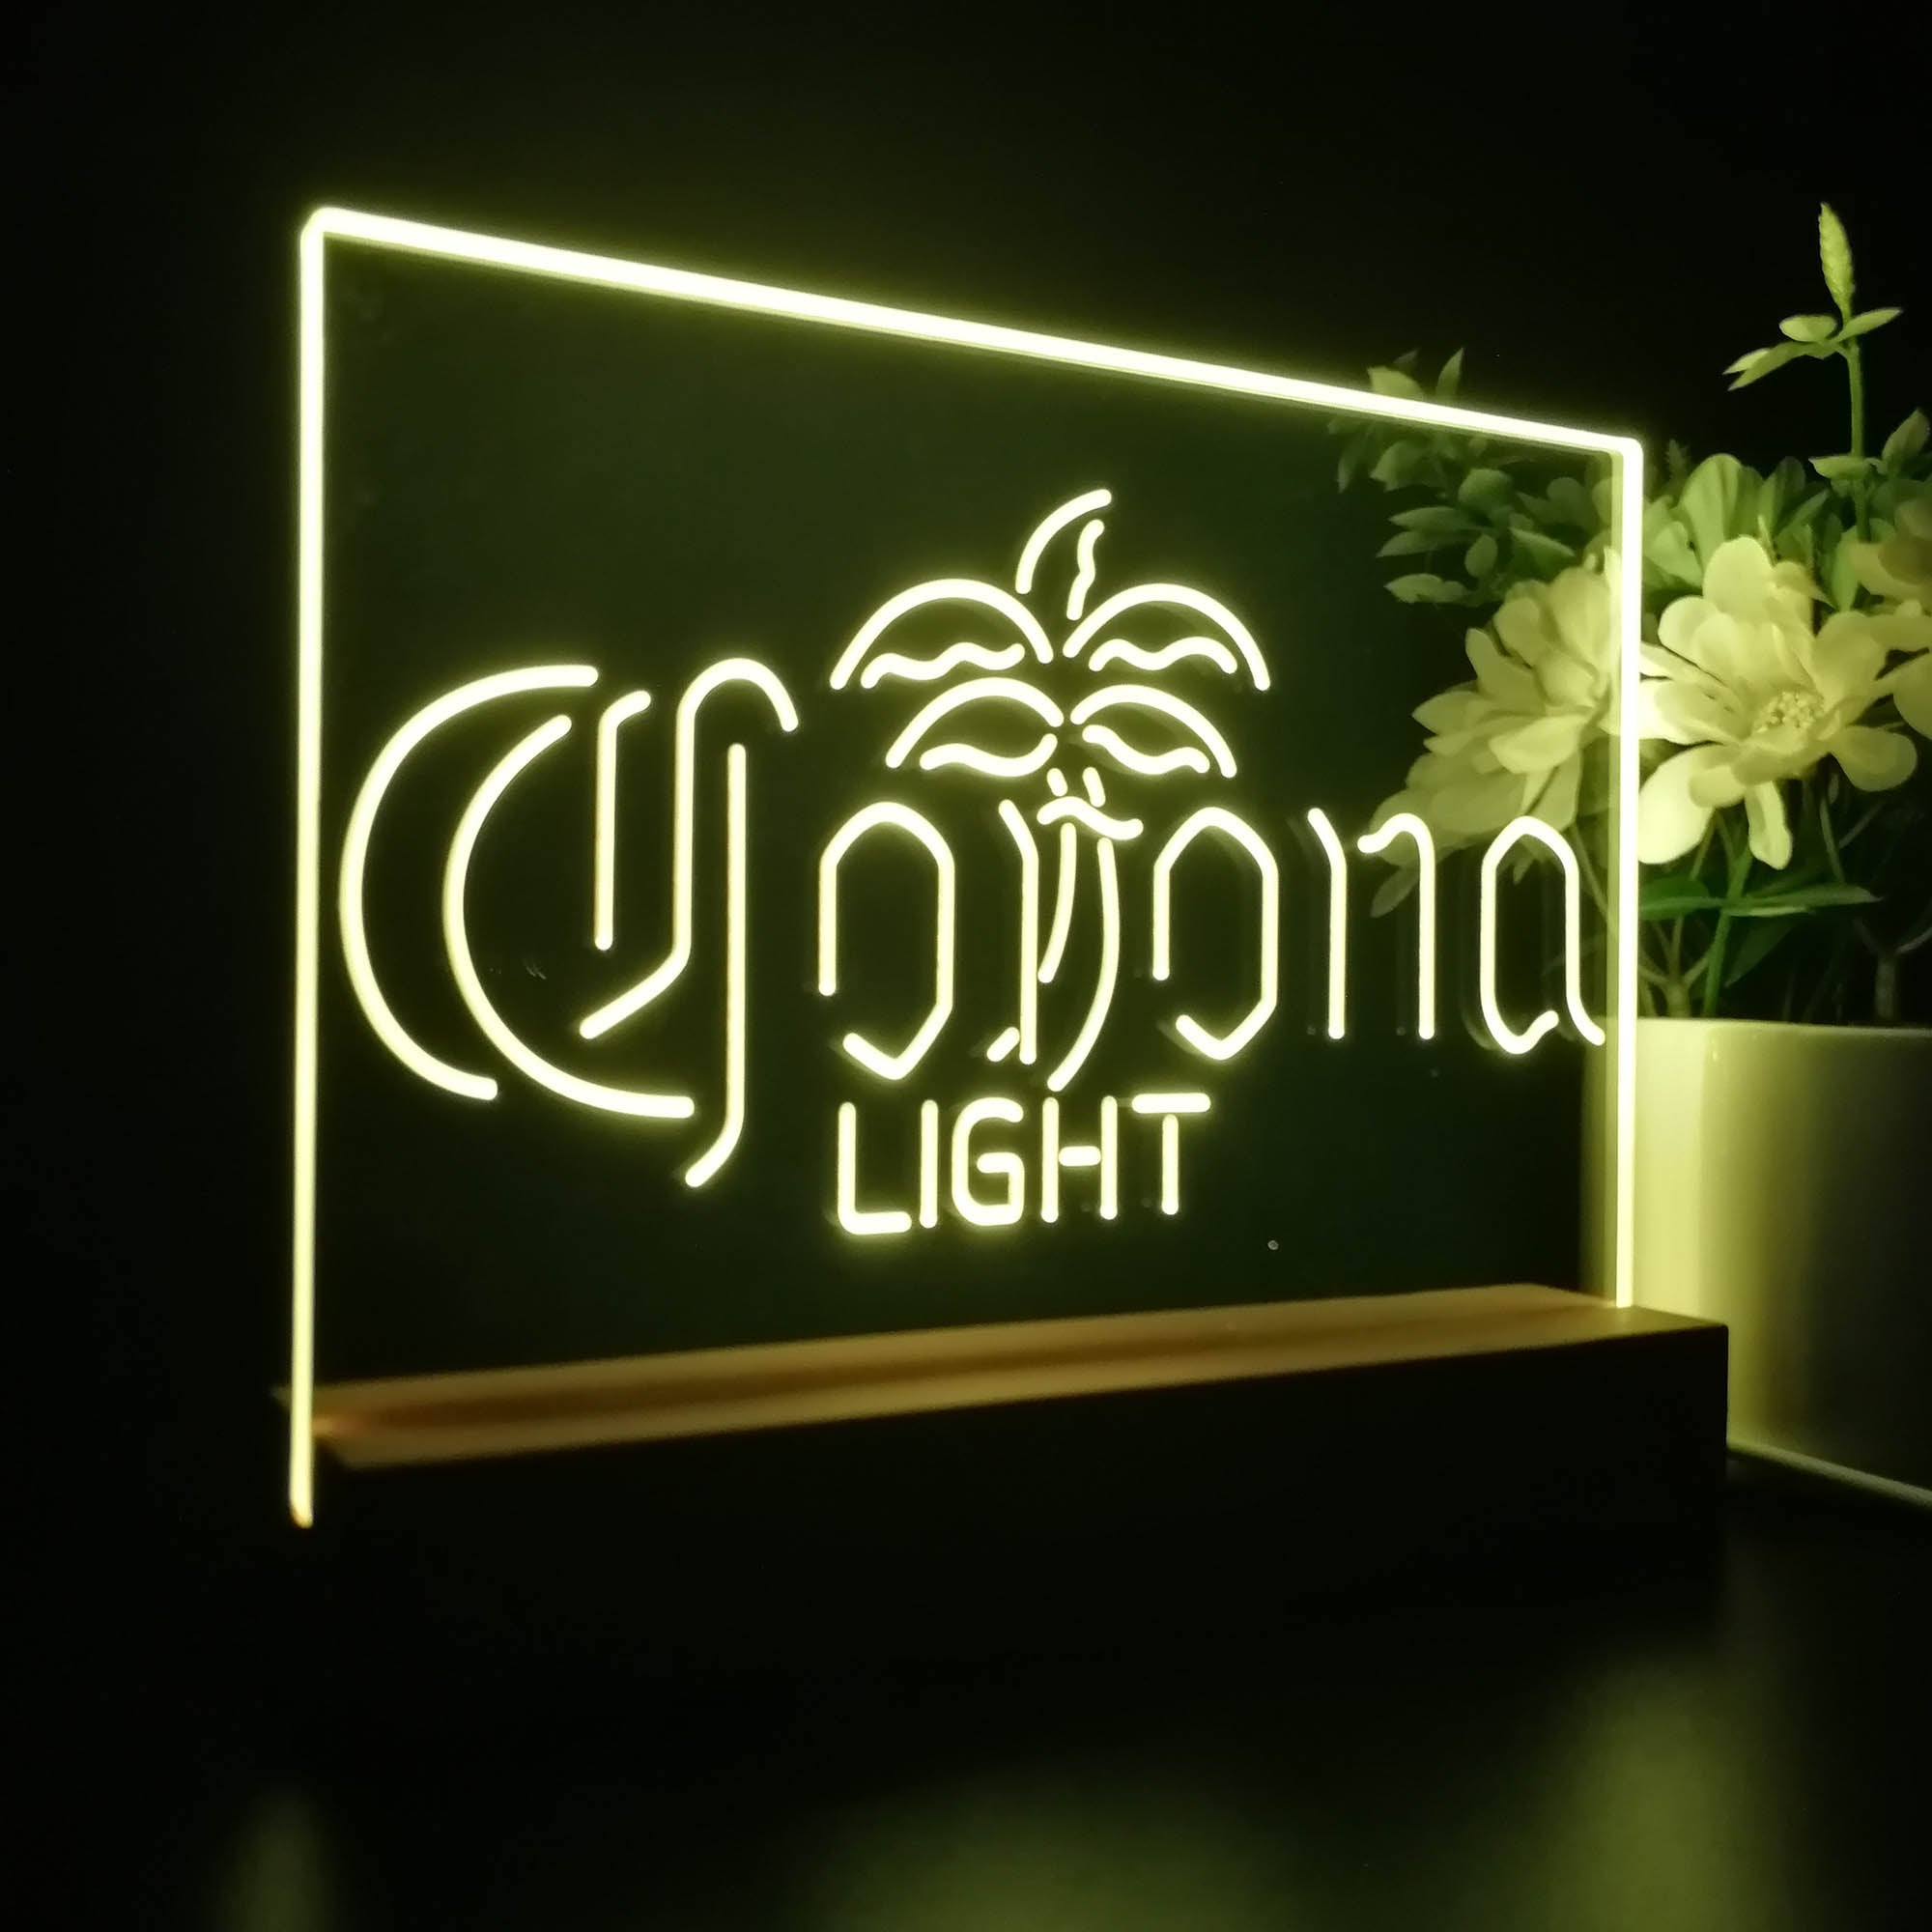 Coronas Light Palm Tree Middle Night Light LED Sign